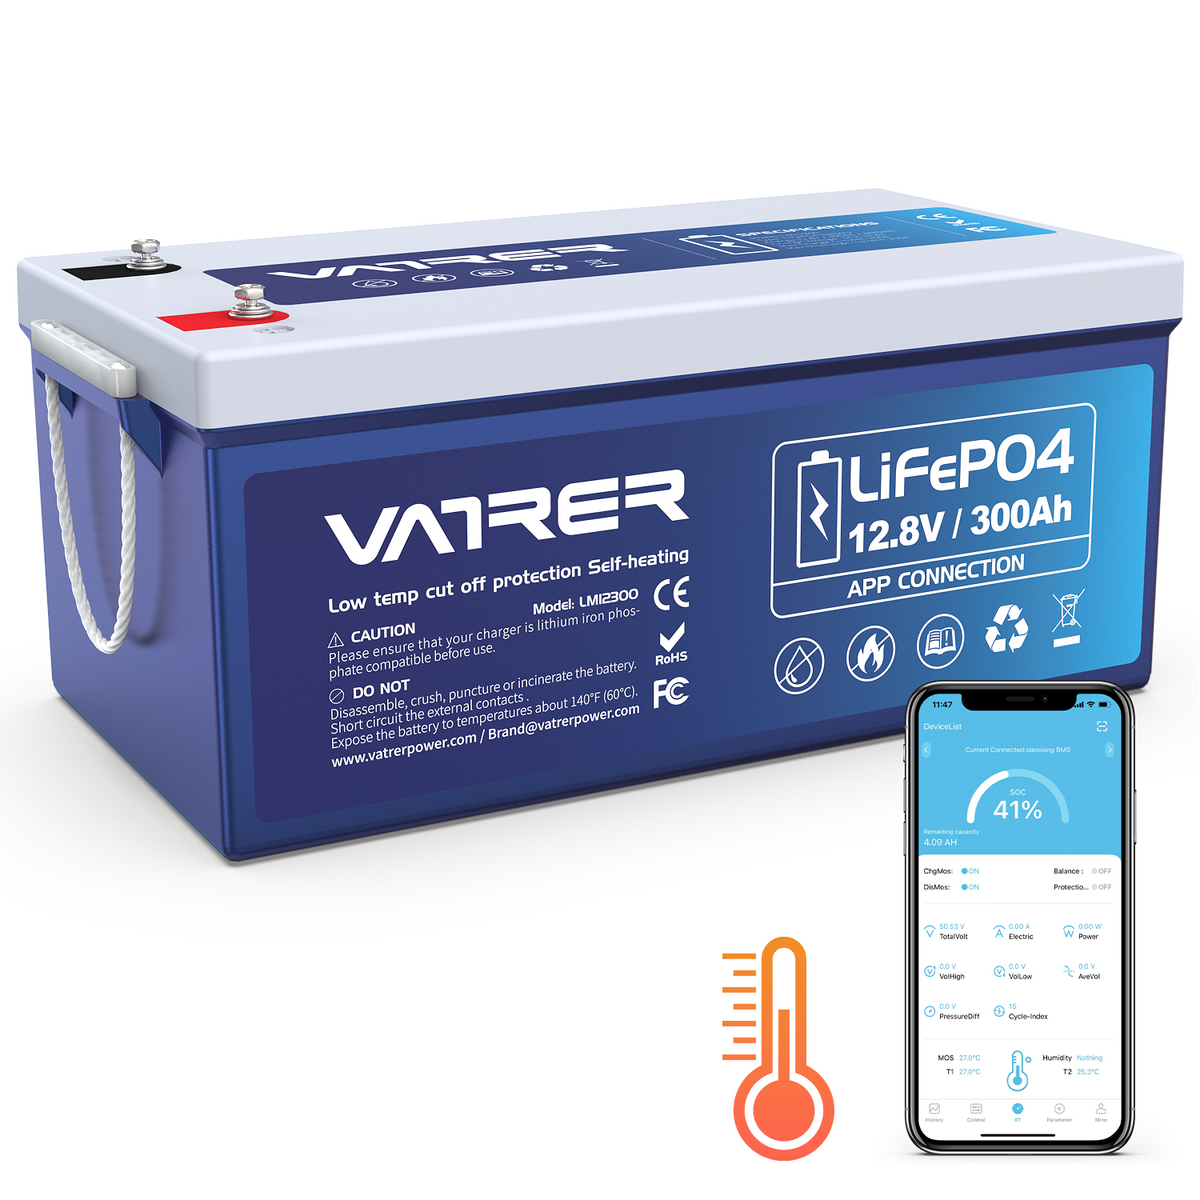 Vatrer 12V 300AH Bluetooth LiFePO4 Lithium Self-Heating Battery CA 11